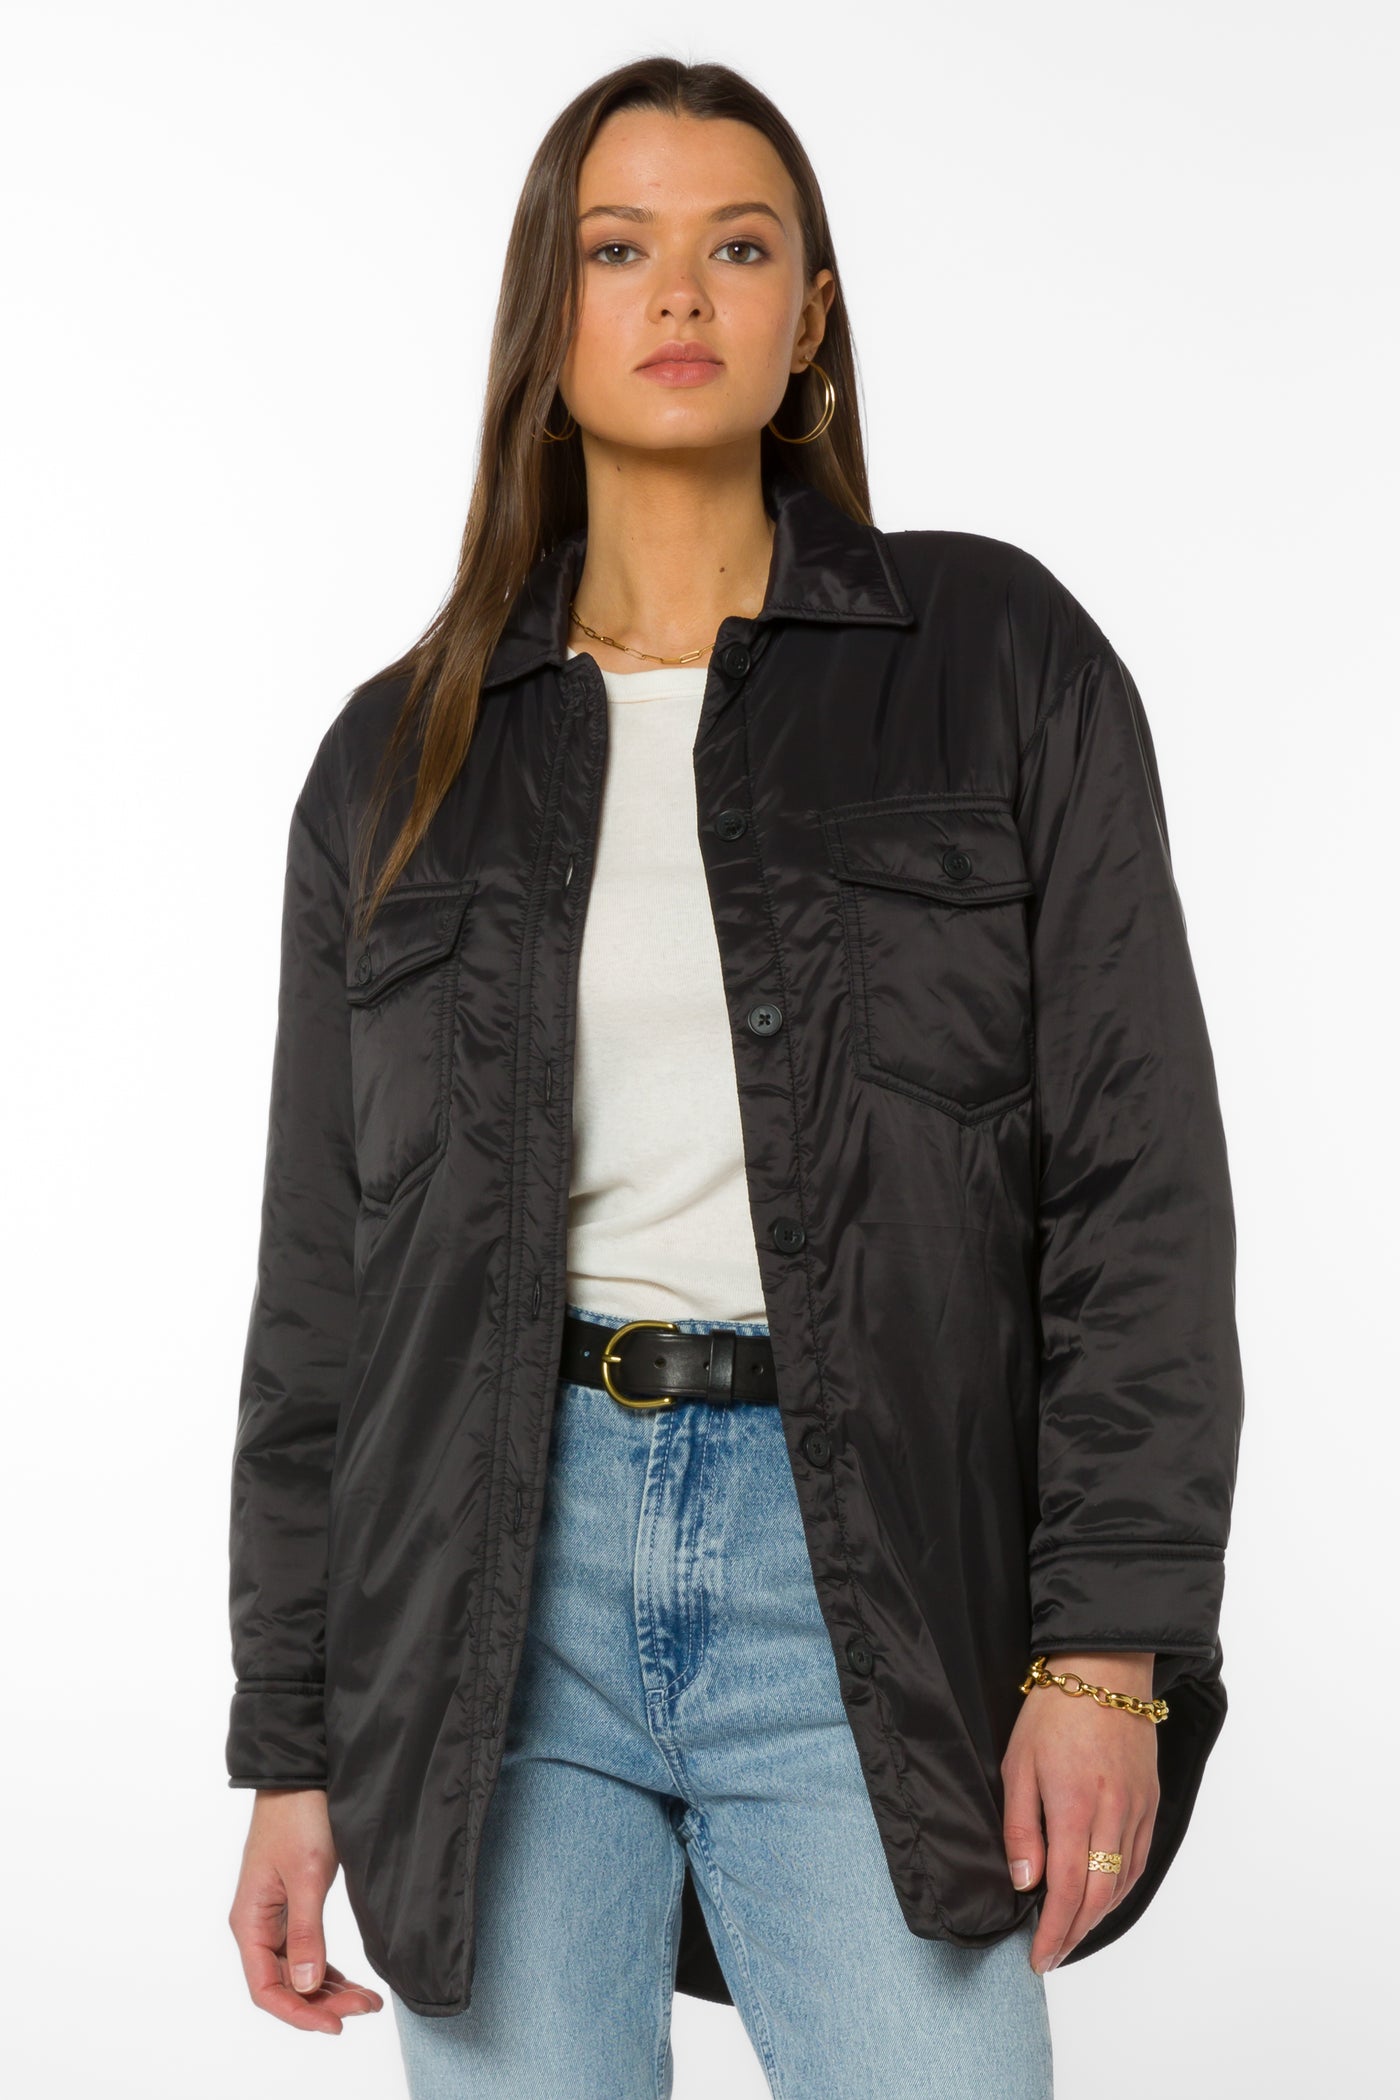 Bernice Black Jacket - Jackets & Outerwear - Velvet Heart Clothing